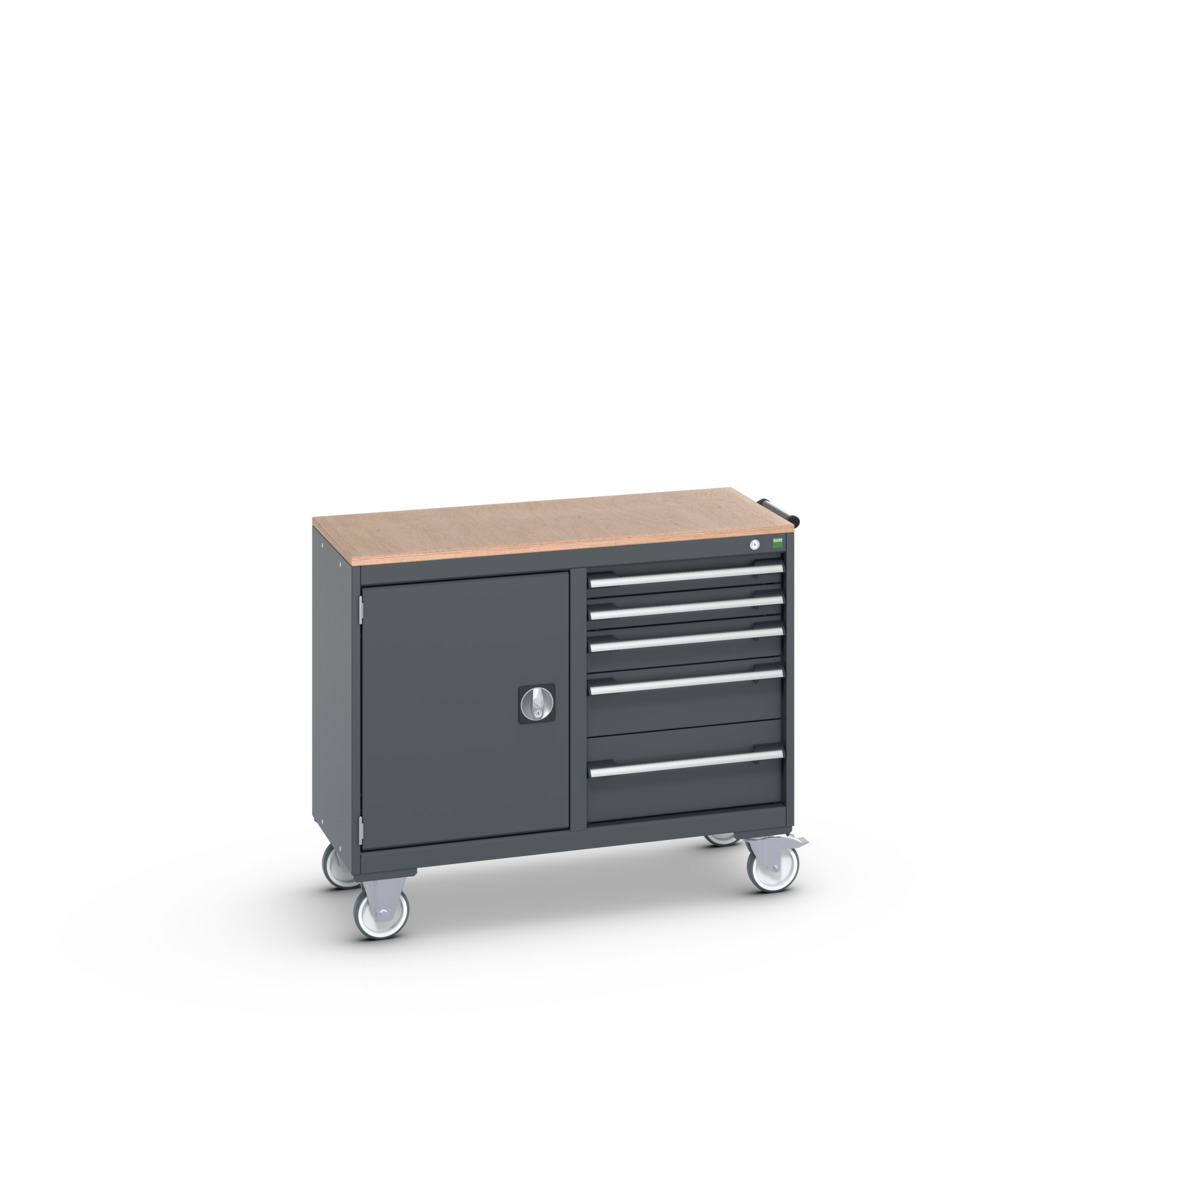 41006007.77V - cubio mobile cabinet 50/50 (mpx)